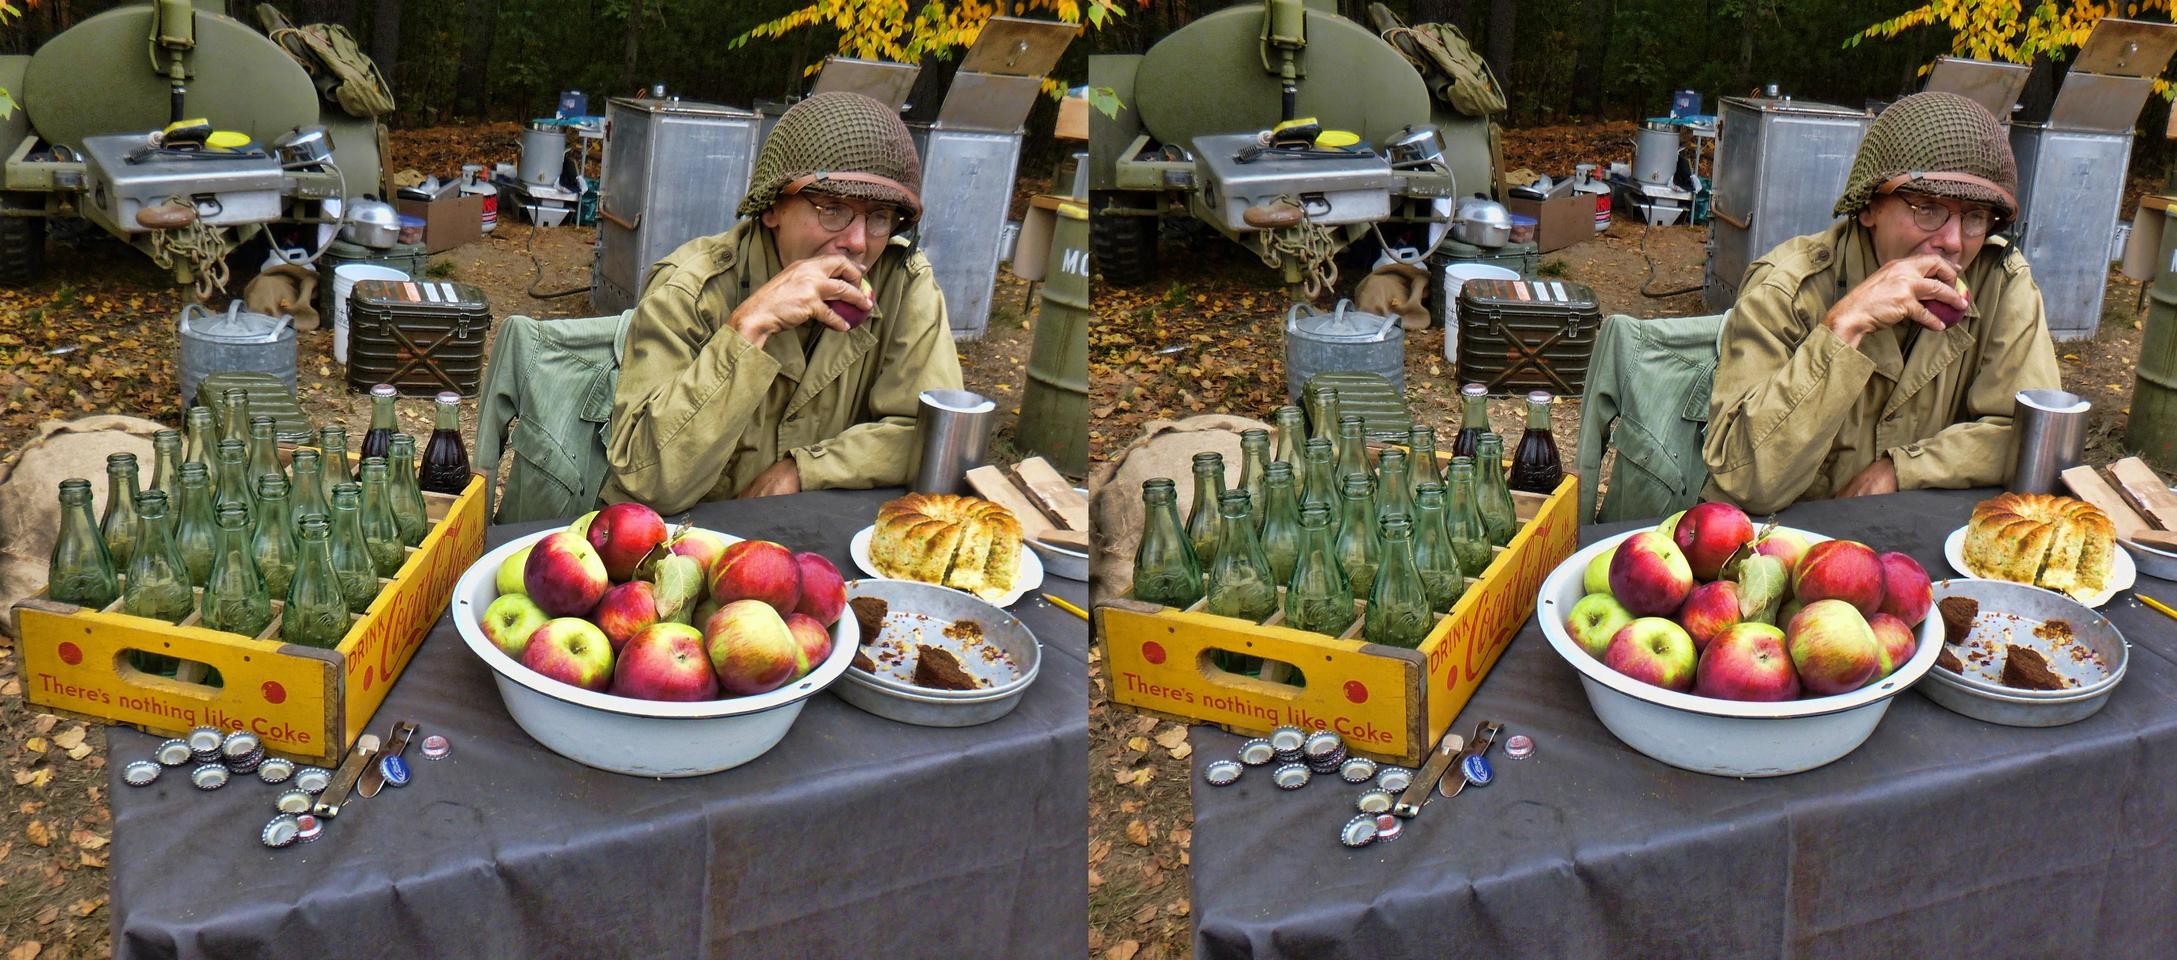 Collings Foundation WORLD WAR II Re-enactment Coke, Apples and Dessert